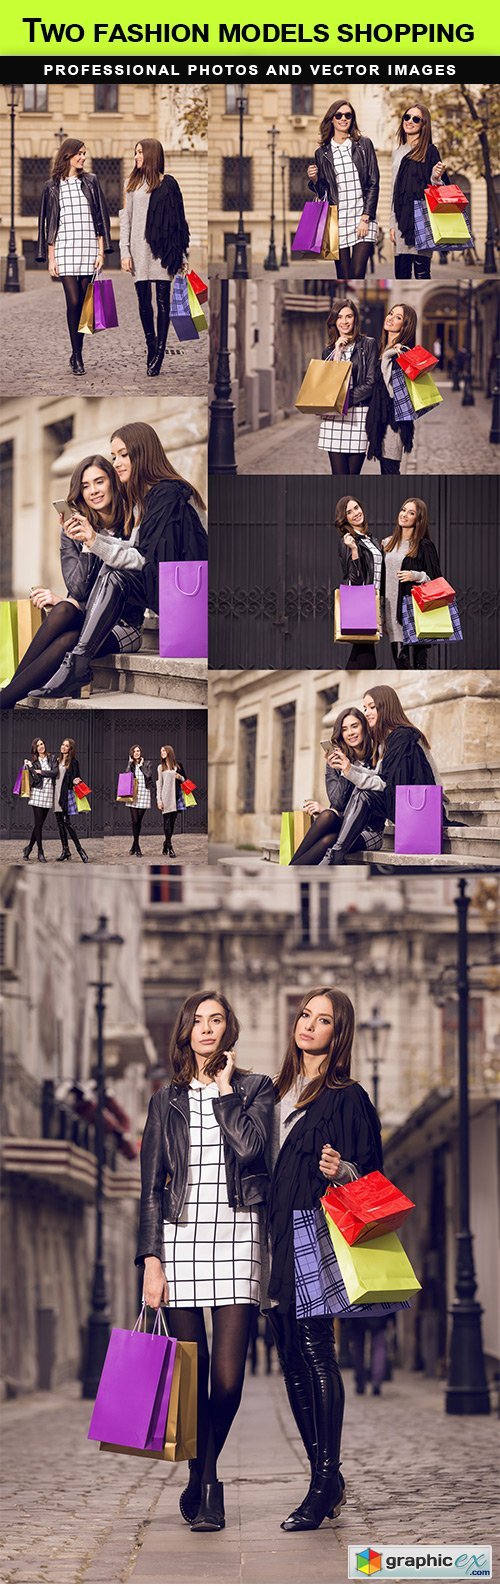 Two fashion models shopping